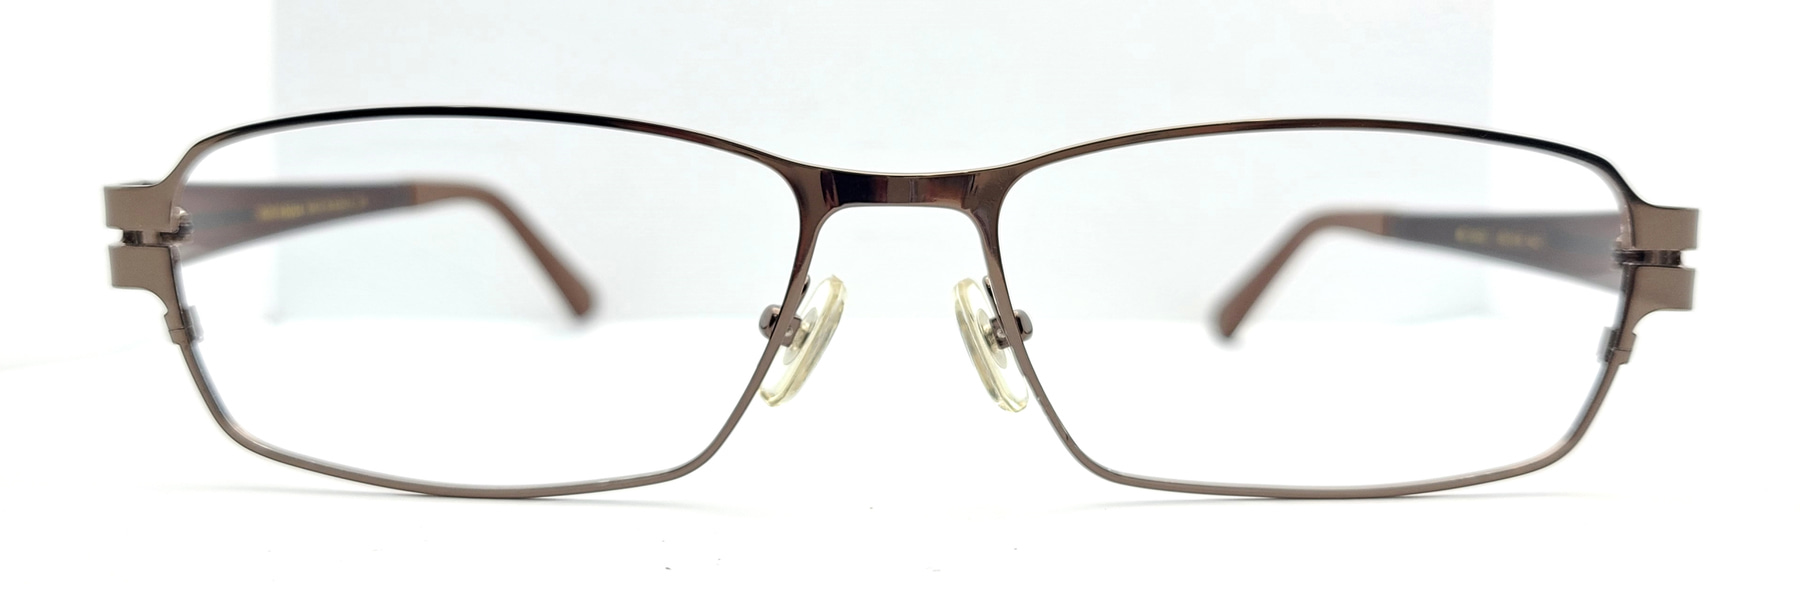 MINIHOUSE M-1033, Korean glasses, sunglasses, eyeglasses, glasses